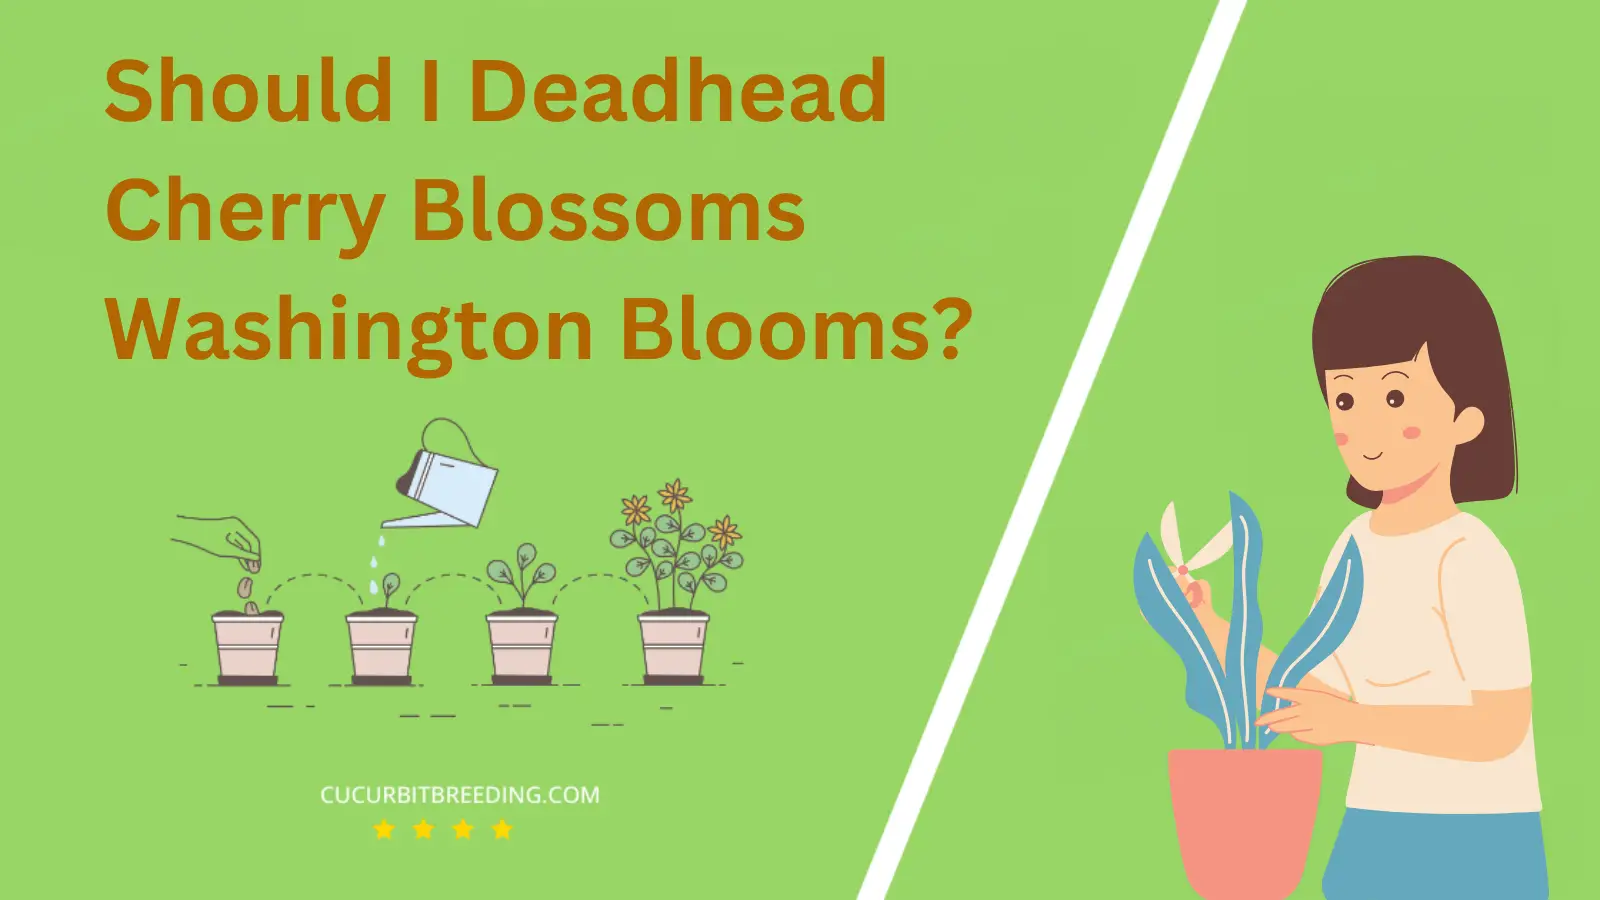 Should I Deadhead Cherry Blossoms Washington Blooms?